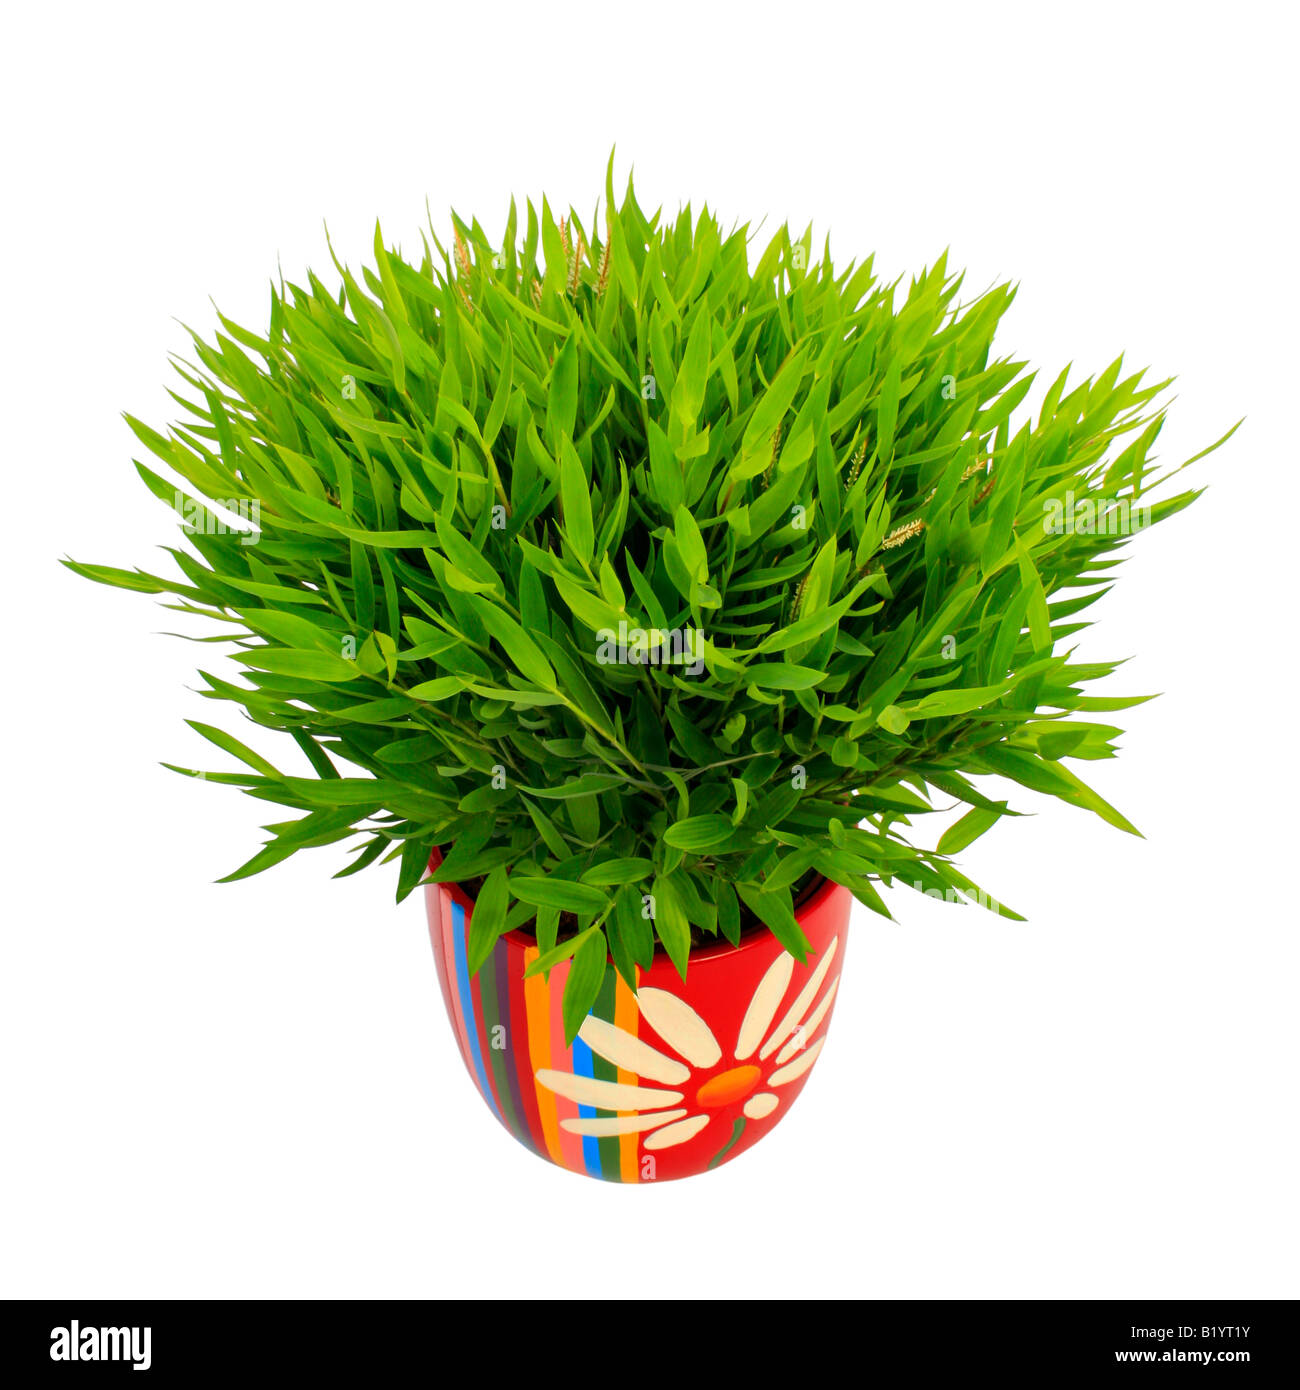 https://c8.alamy.com/comp/B1YT1Y/miniature-bamboo-pogonatherum-paniceum-plant-in-colourful-pot-B1YT1Y.jpg